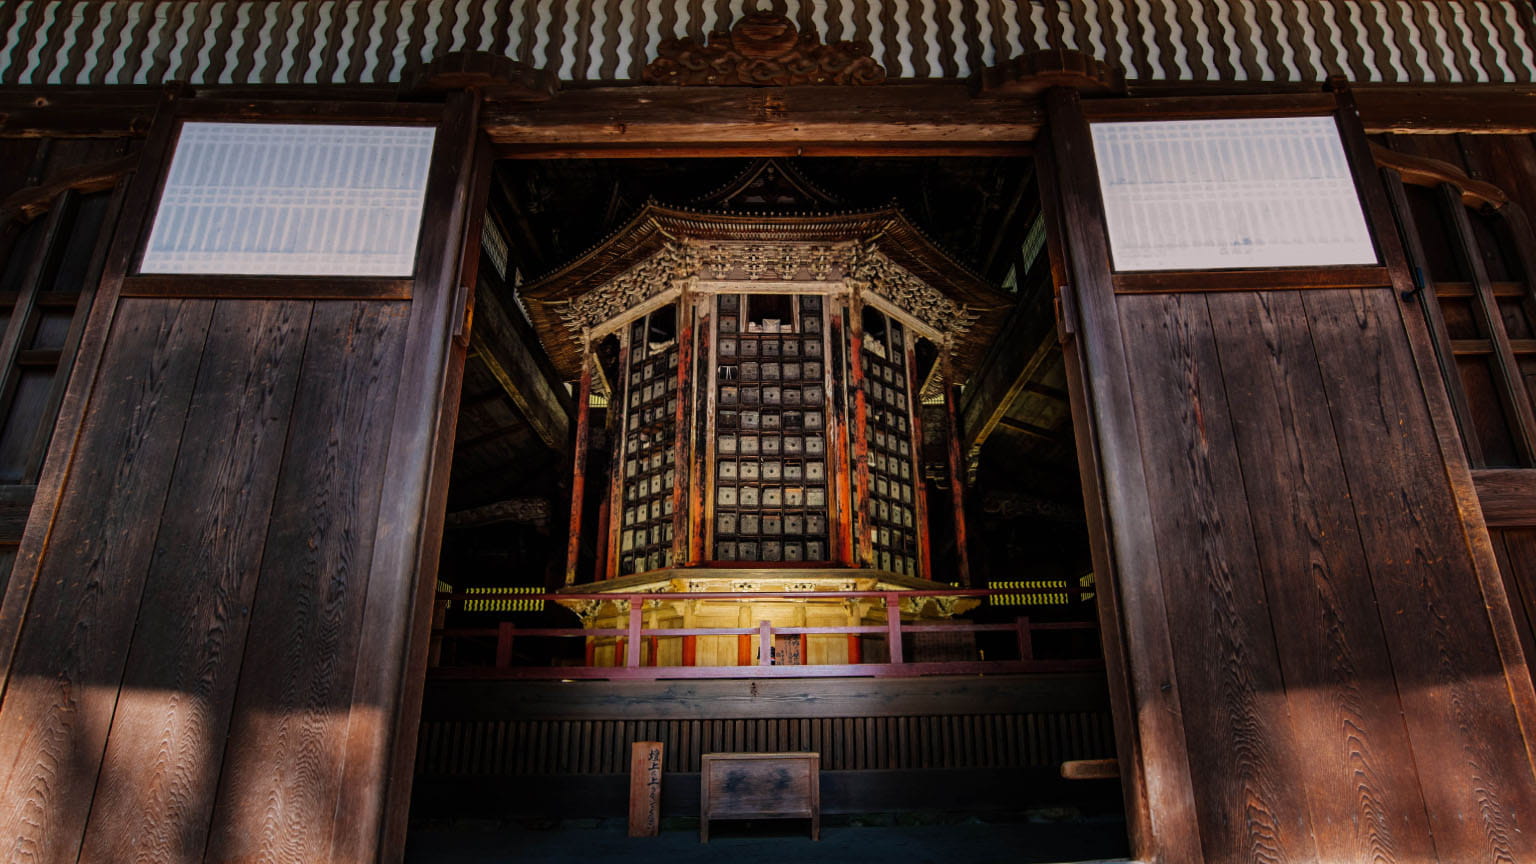 इस्साई क्योज़ो बौद्ध शास्त्र का भण्डार